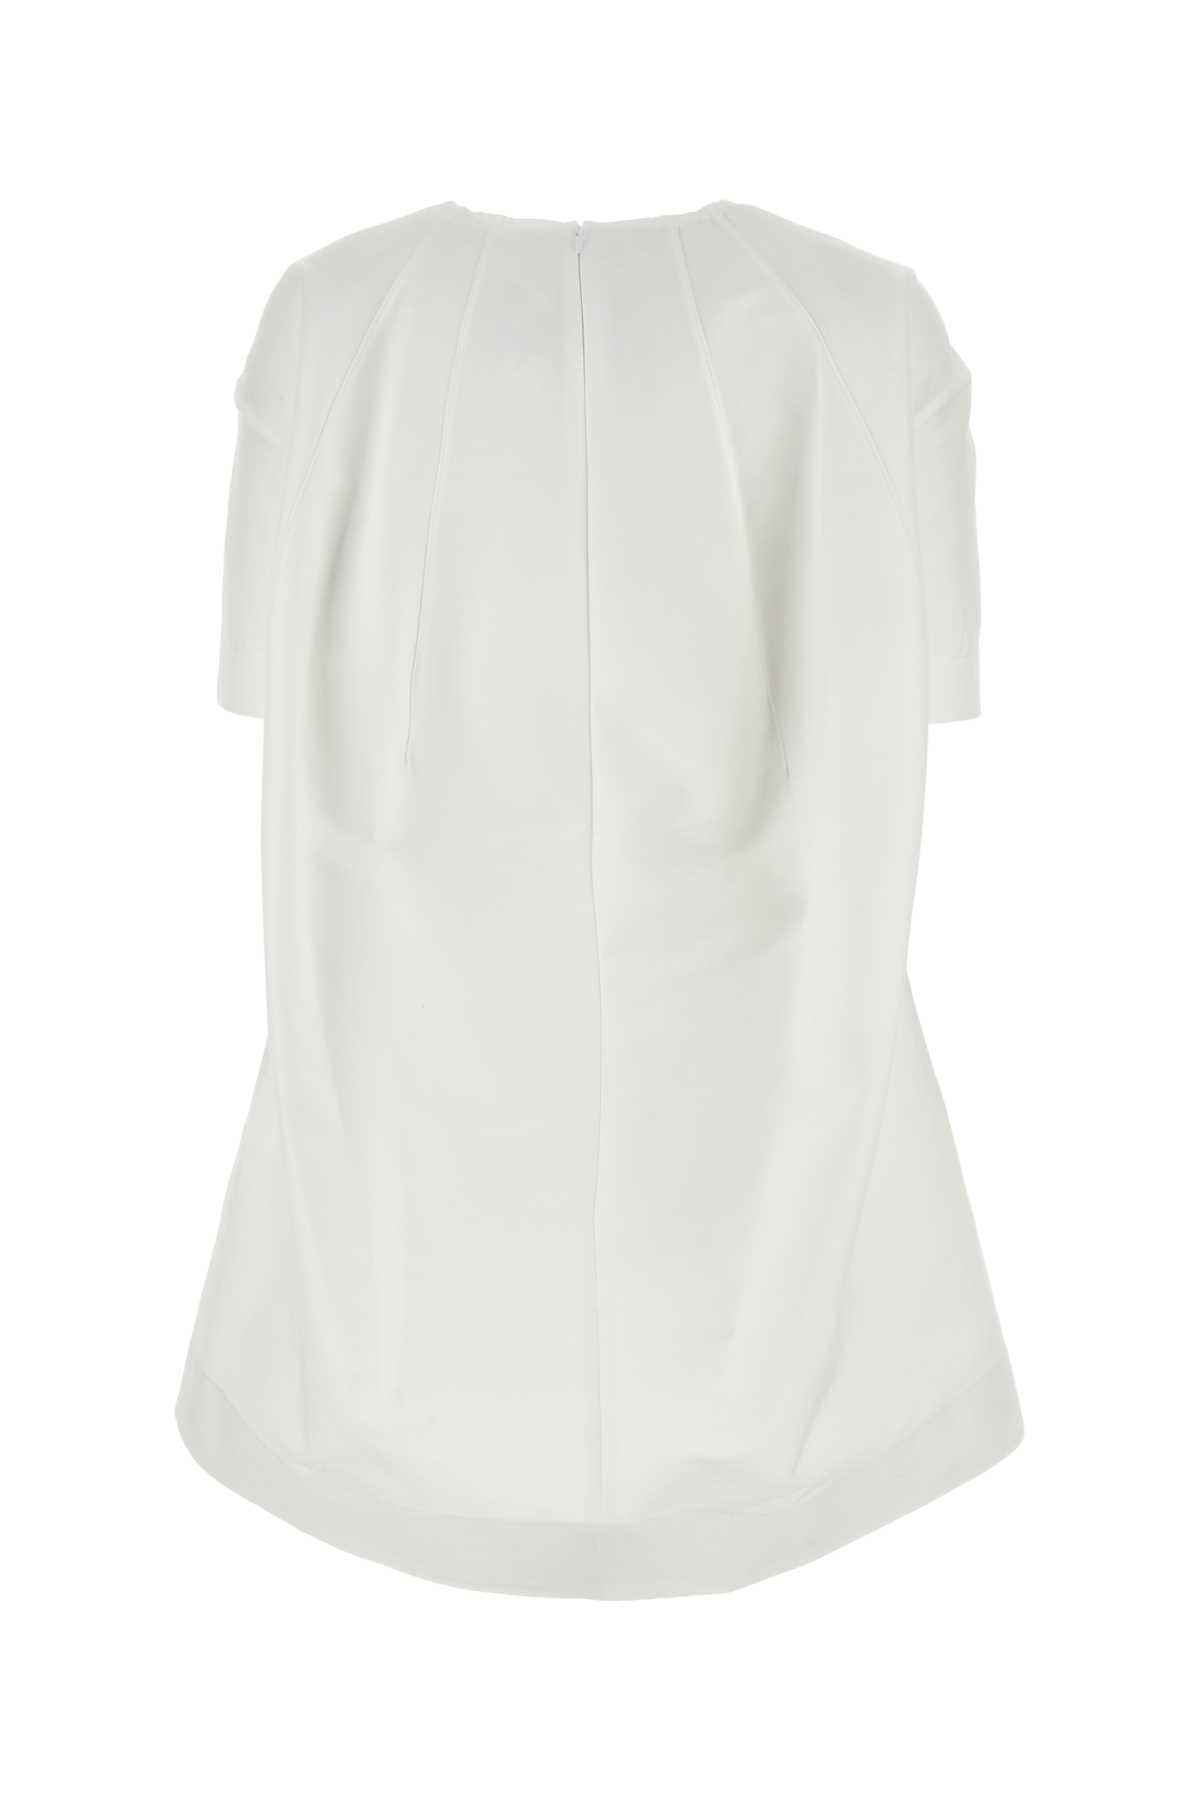 Marni White Cotton T-shirt Dress In Lilywhite